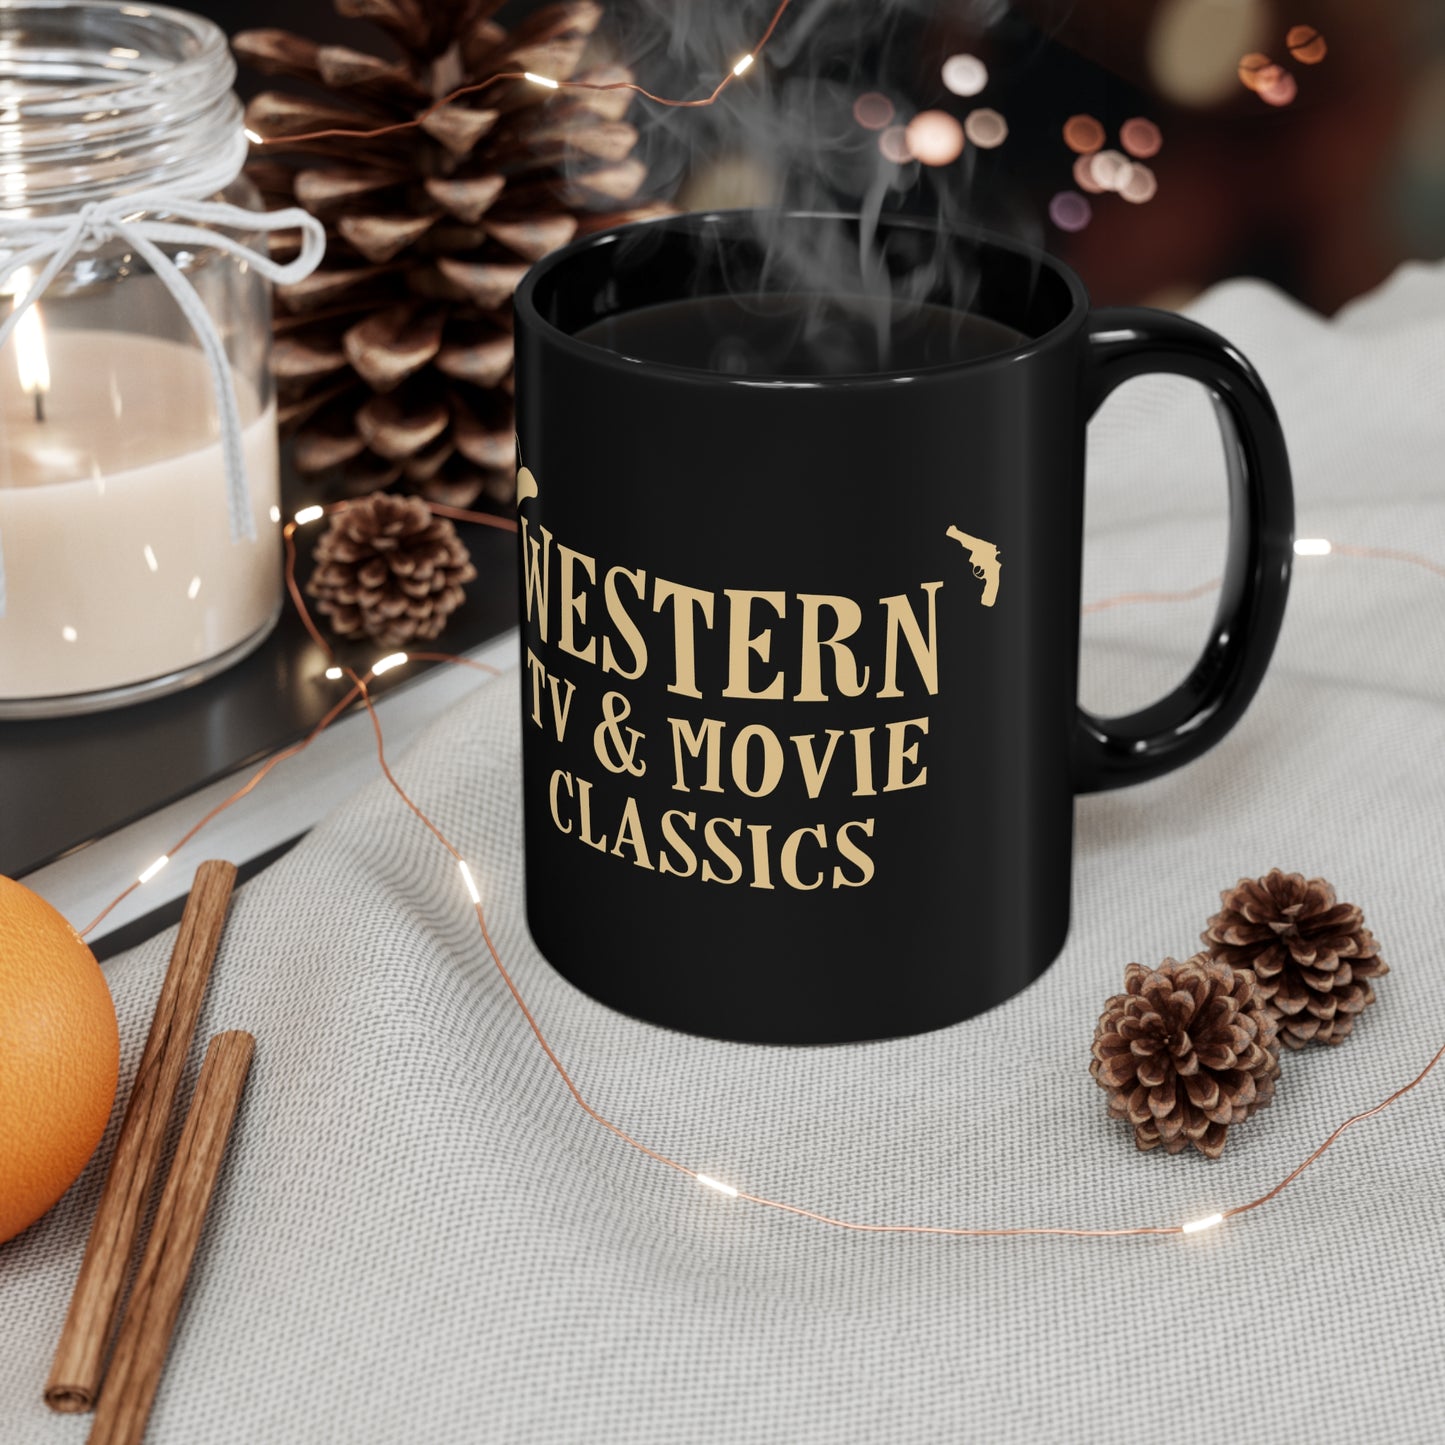 Western TV & Movie Classics - 11oz Black Mug